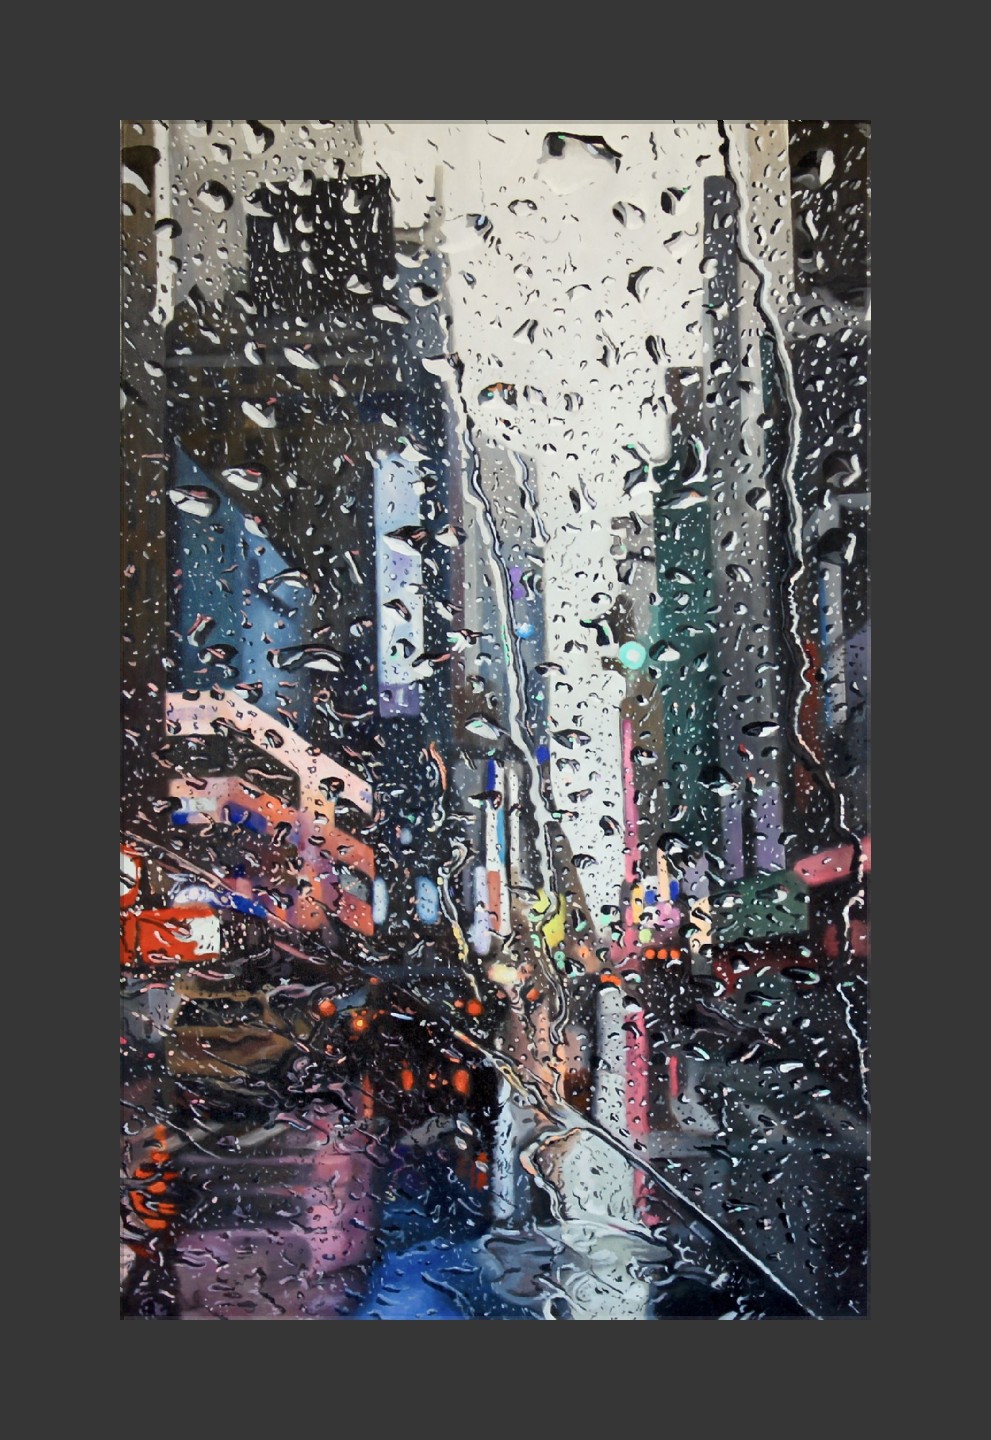  Seventh Avenue Rains  by Michael  Steinbrick